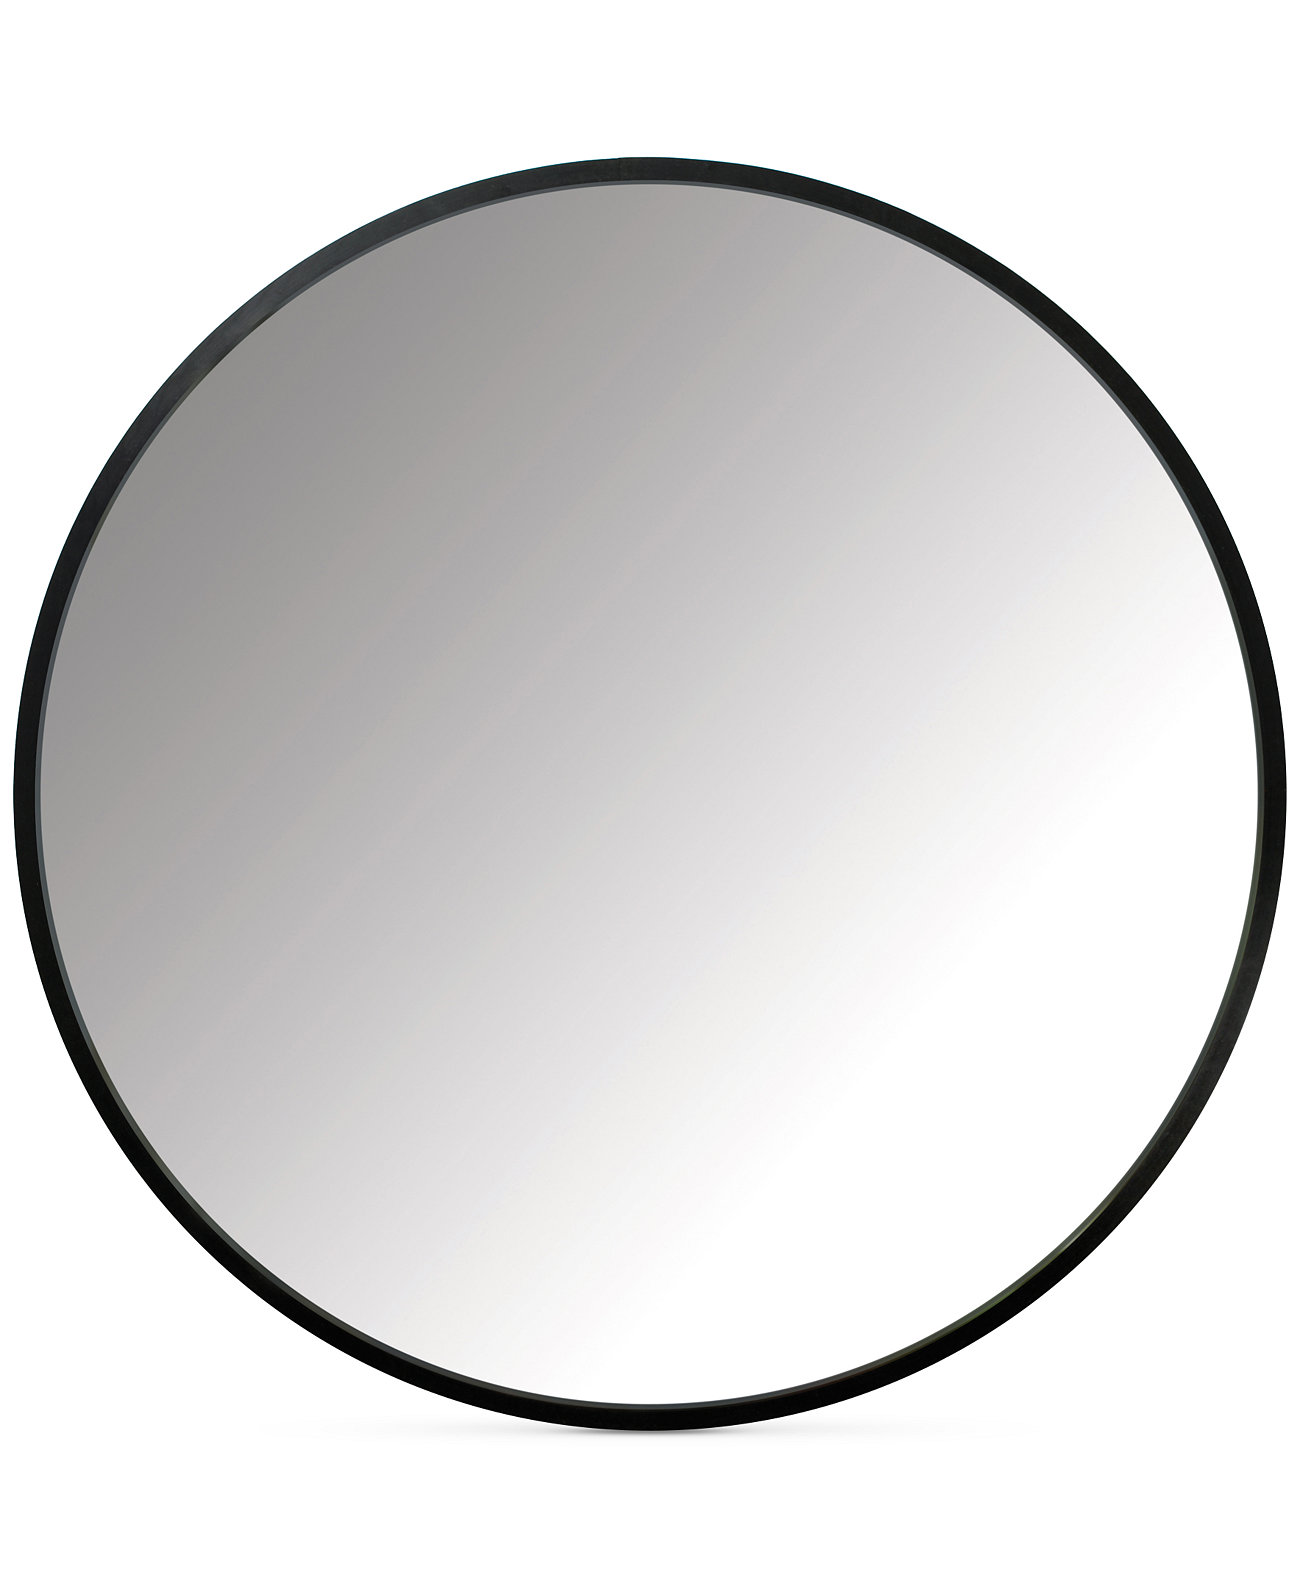 Круглое настенное зеркало Hub, 24 x 24 дюйма Umbra